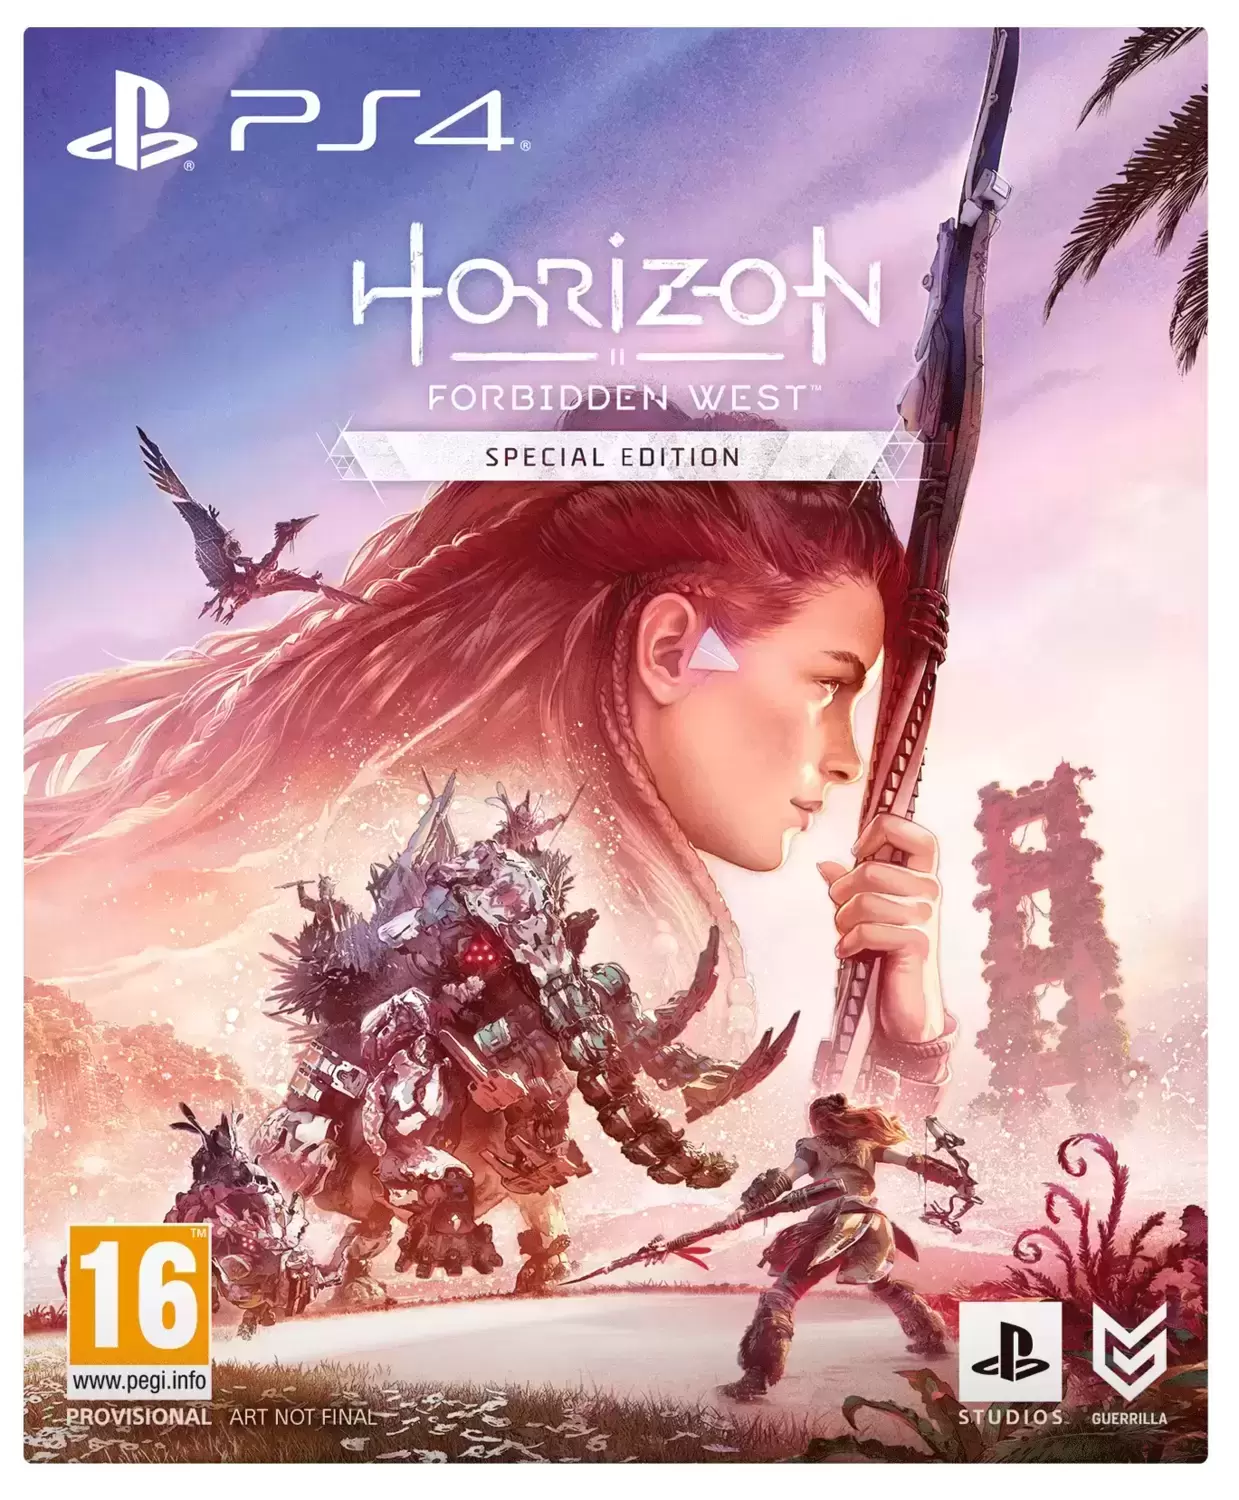 PS4 Games - Horizon Forbidden West - Special Edition